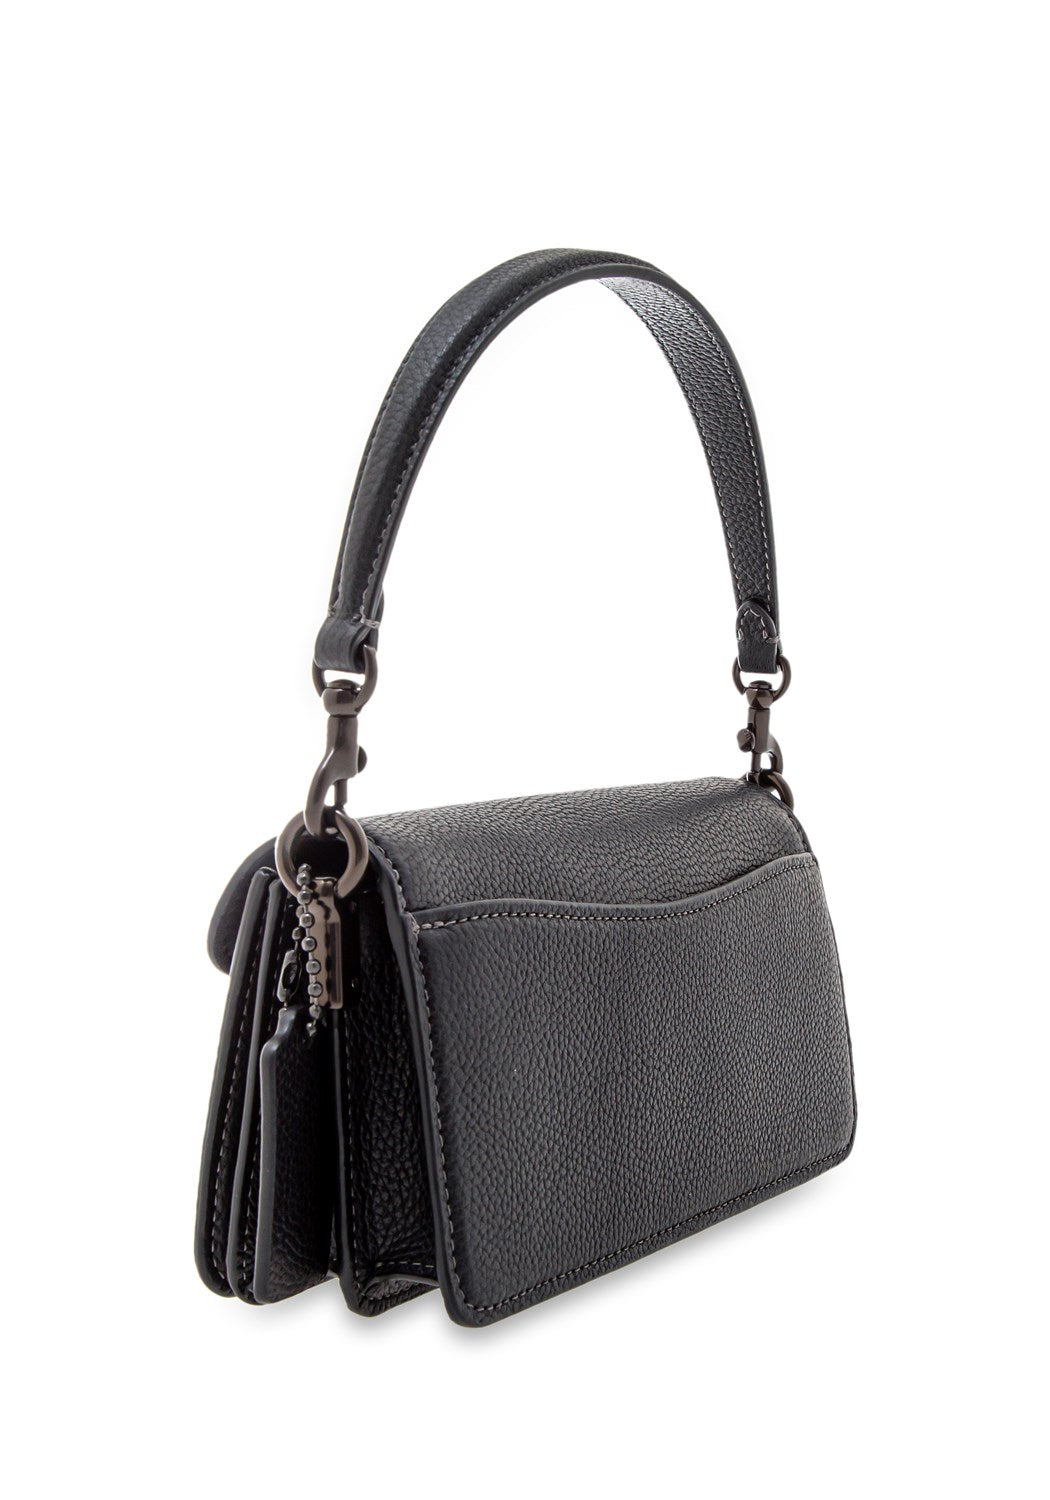 Tabby Shoulder Bag Polished Pebble black | Bildmaterial bereitgestellt von SHOES.PLEASE.